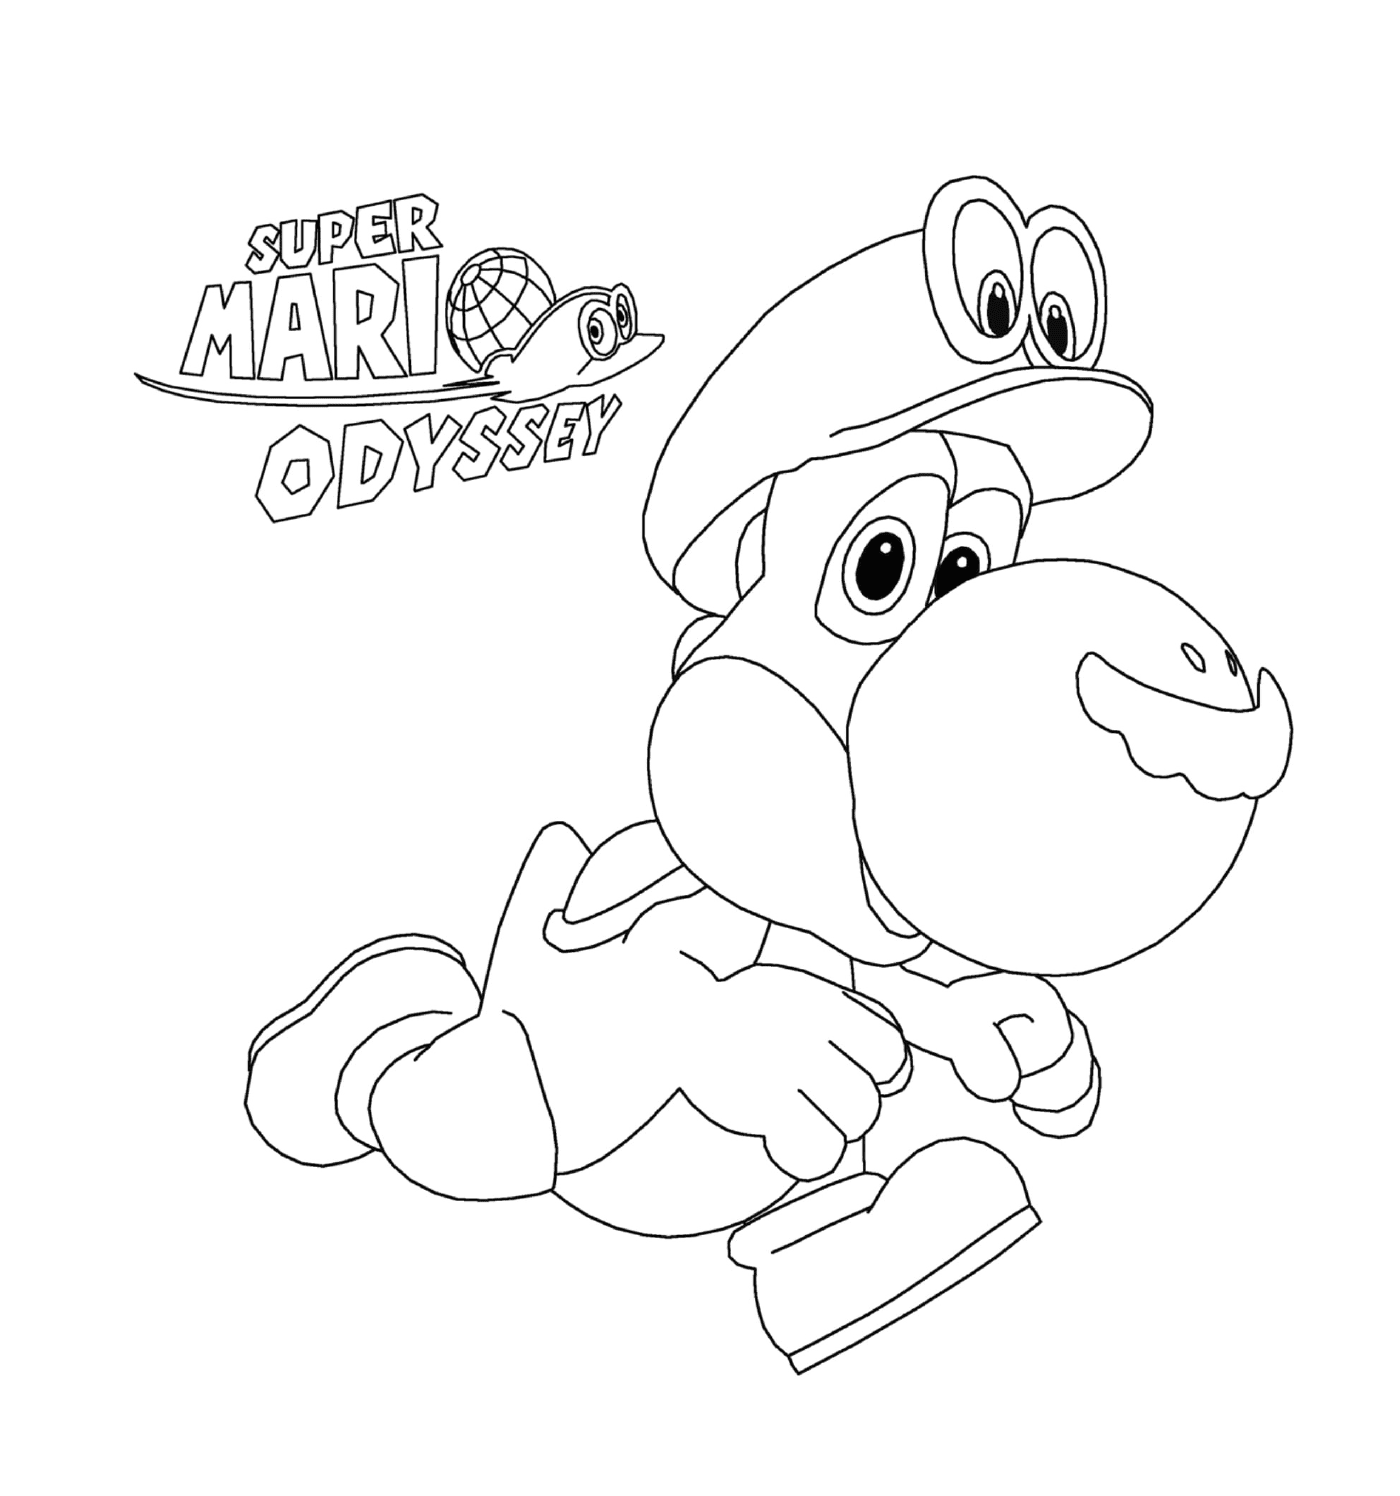  Super Mario Odyssey with Yoshi from Nintendo 